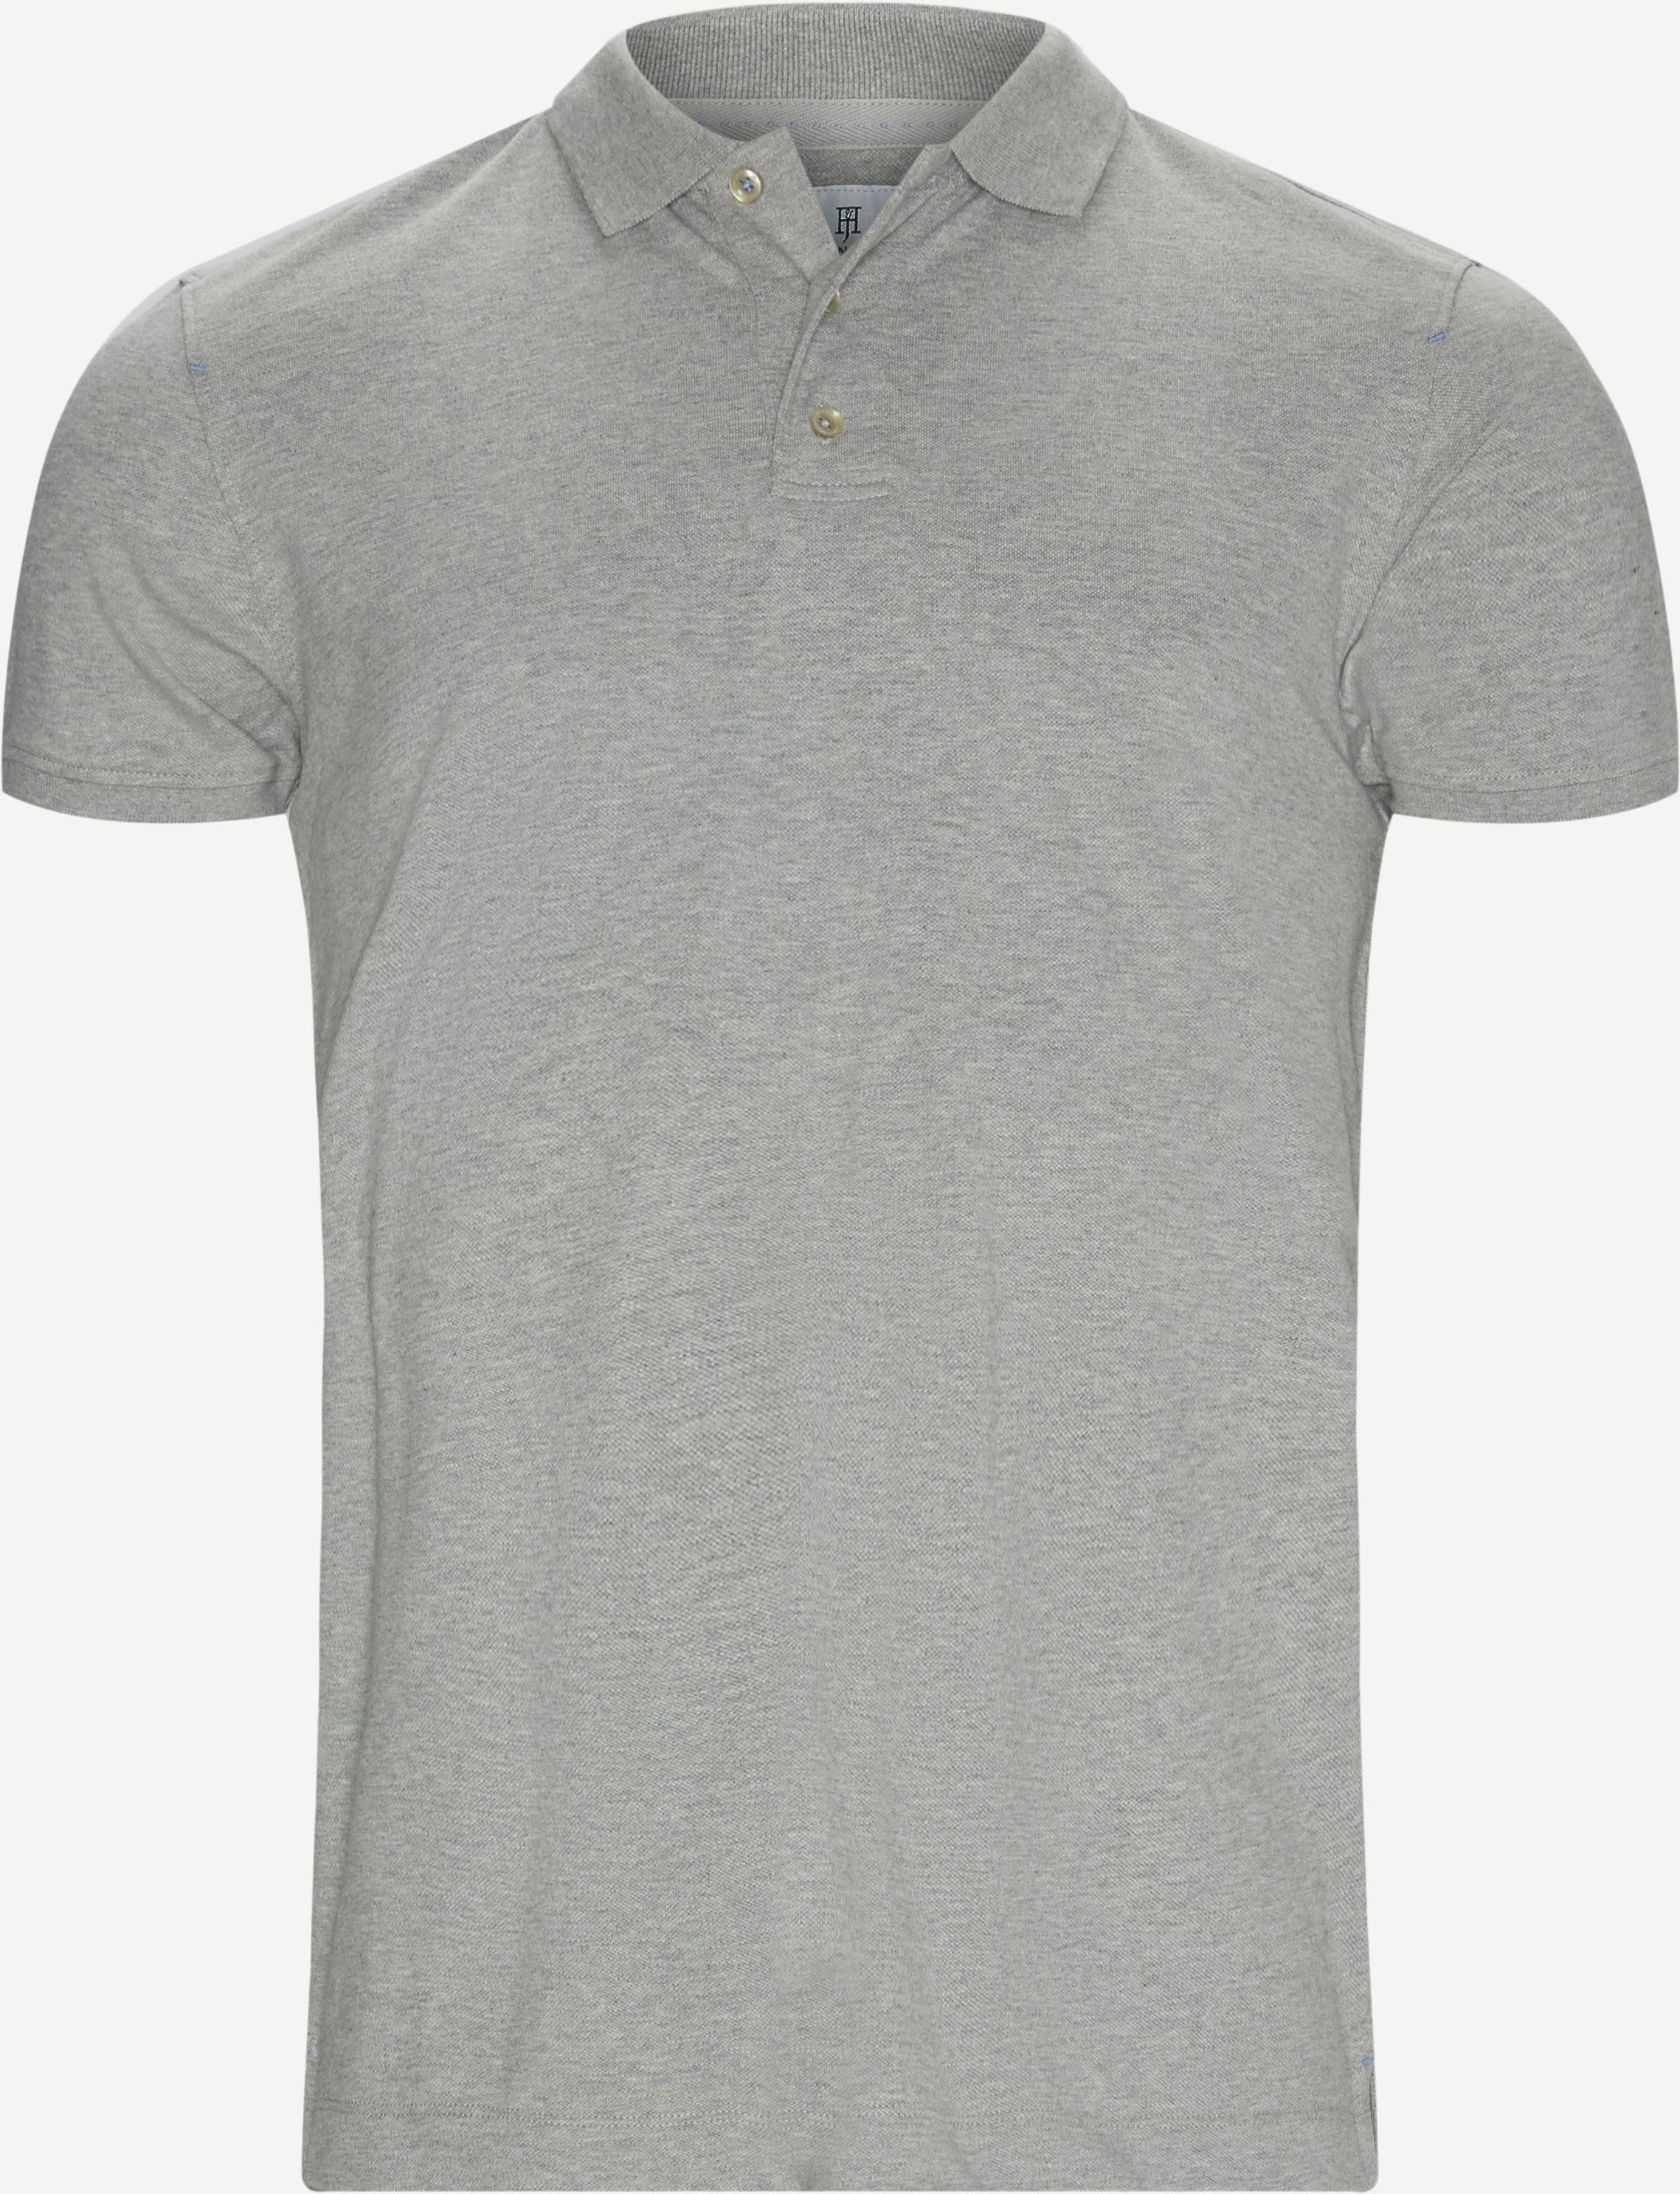 Pique Stretch Polo - T-shirts - Modern fit - Grey